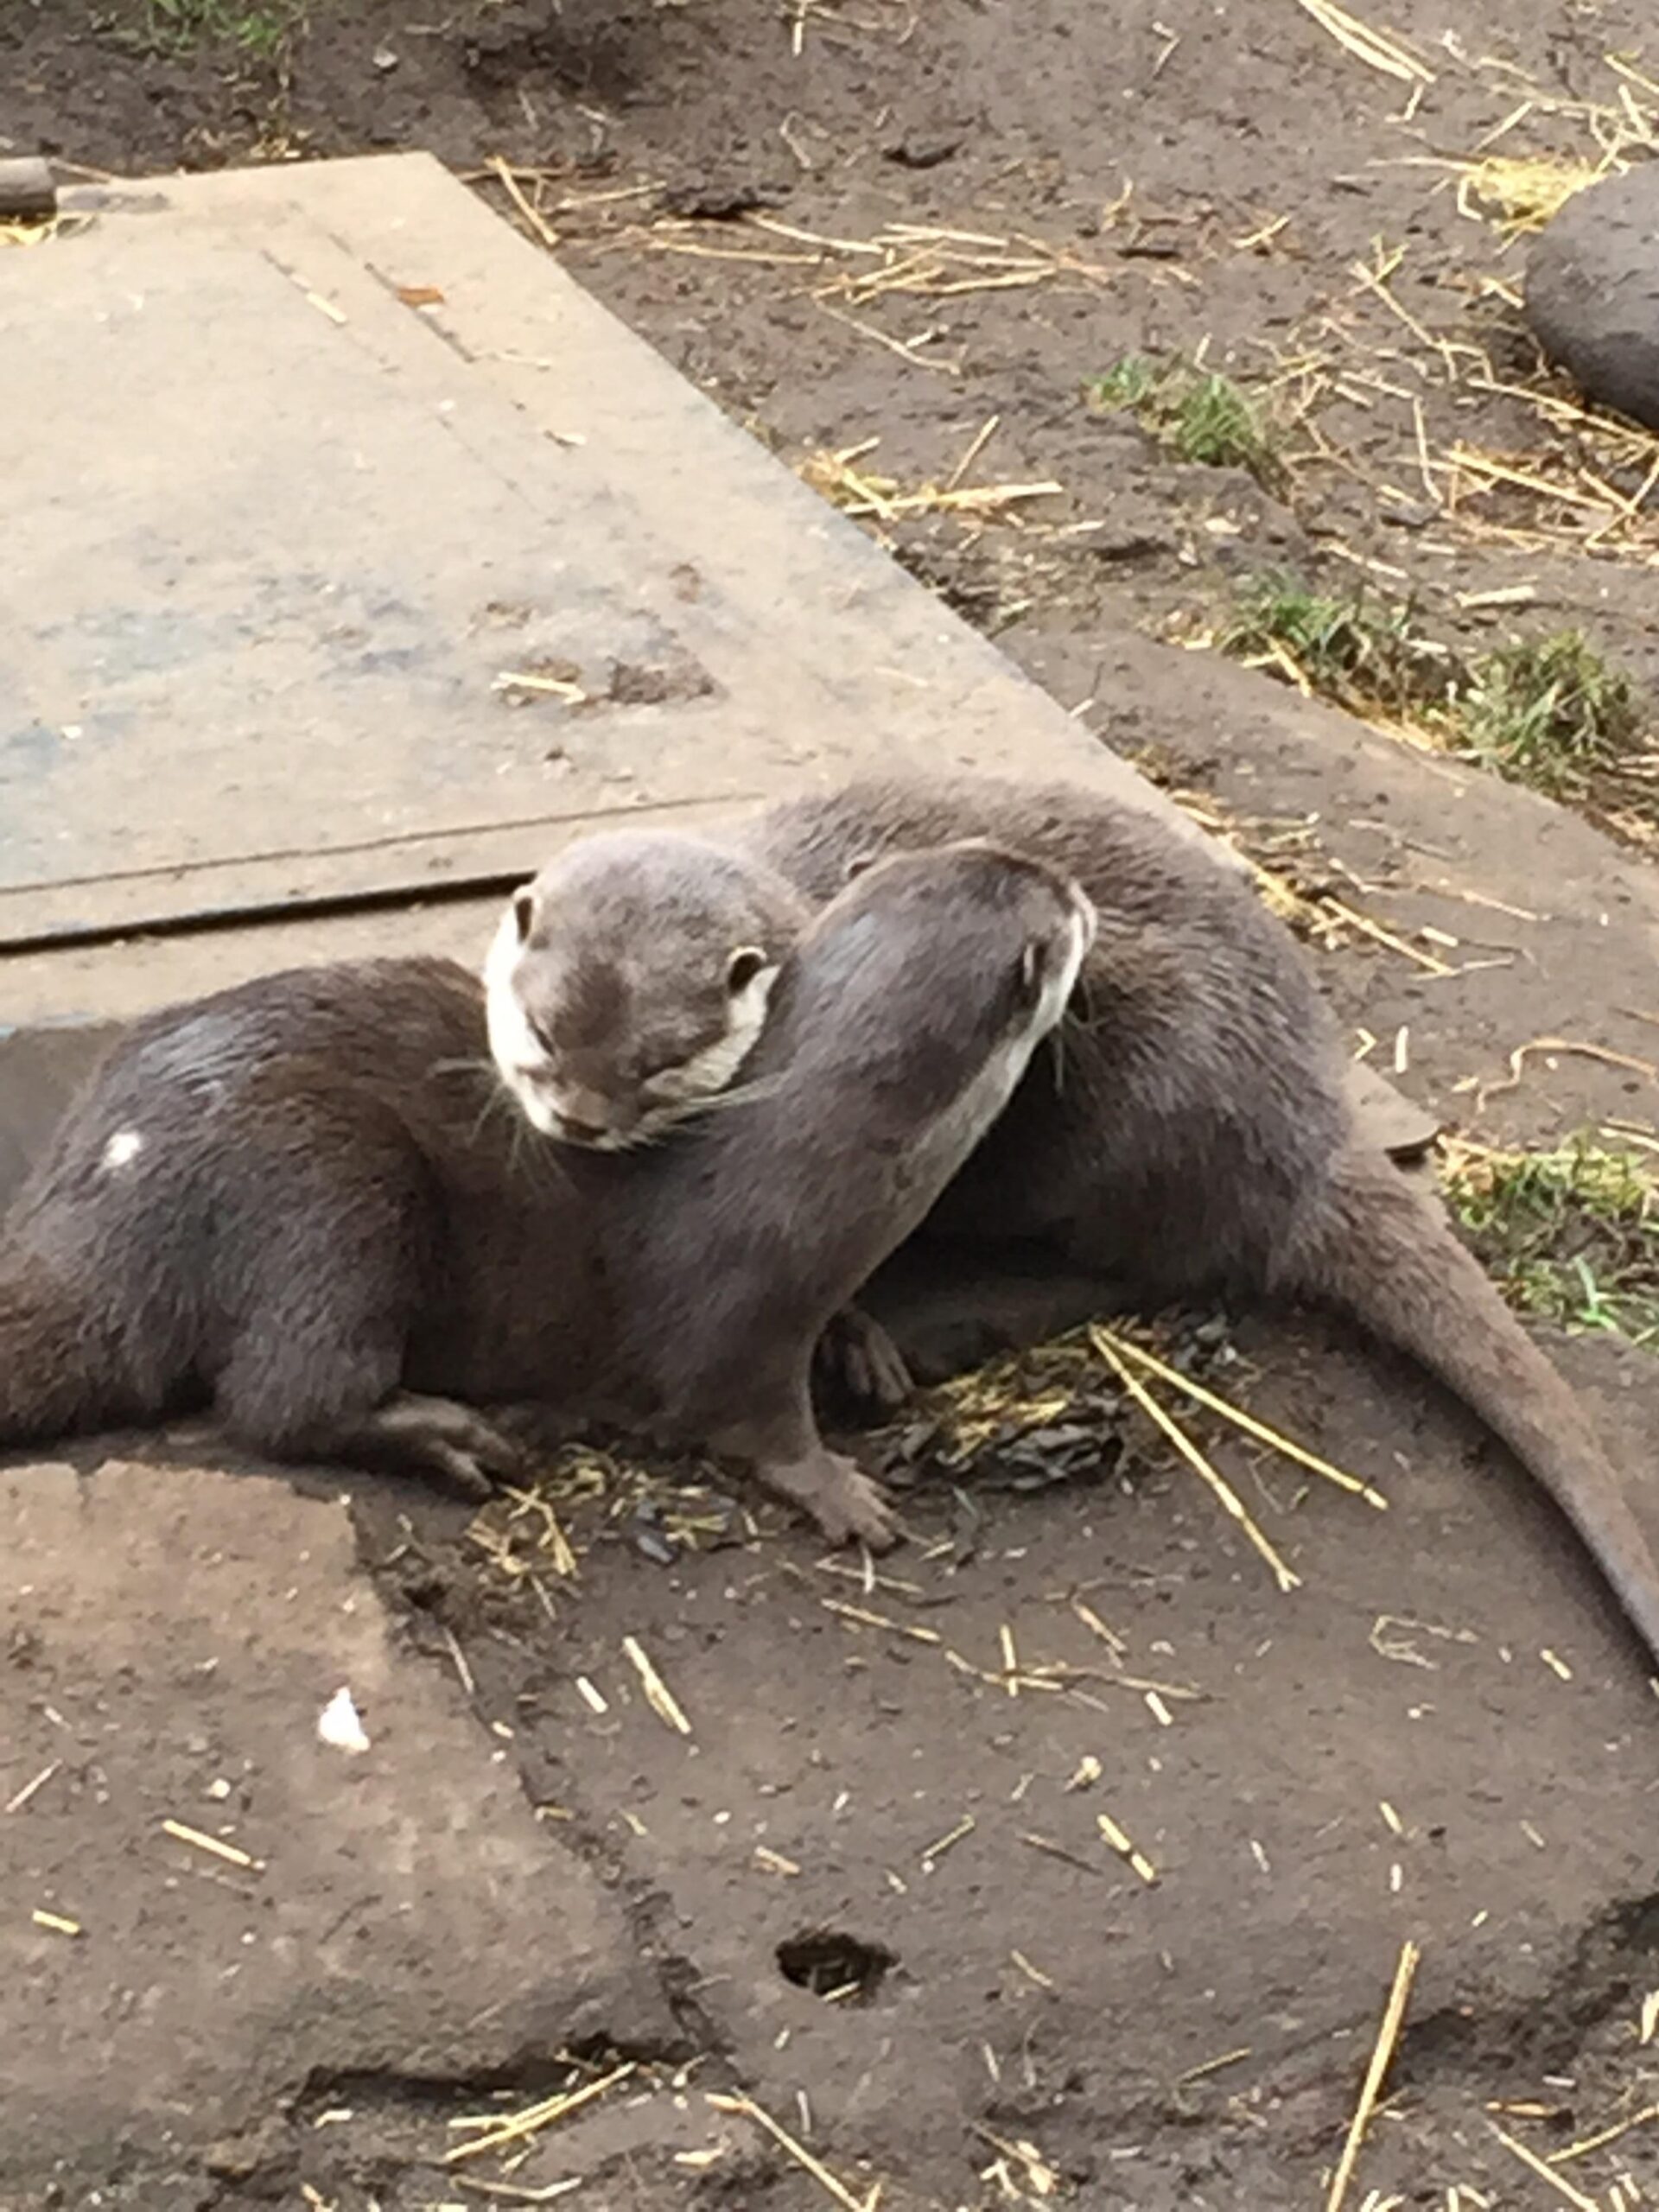 Edinburgh zoo’s otters feeling the fondness